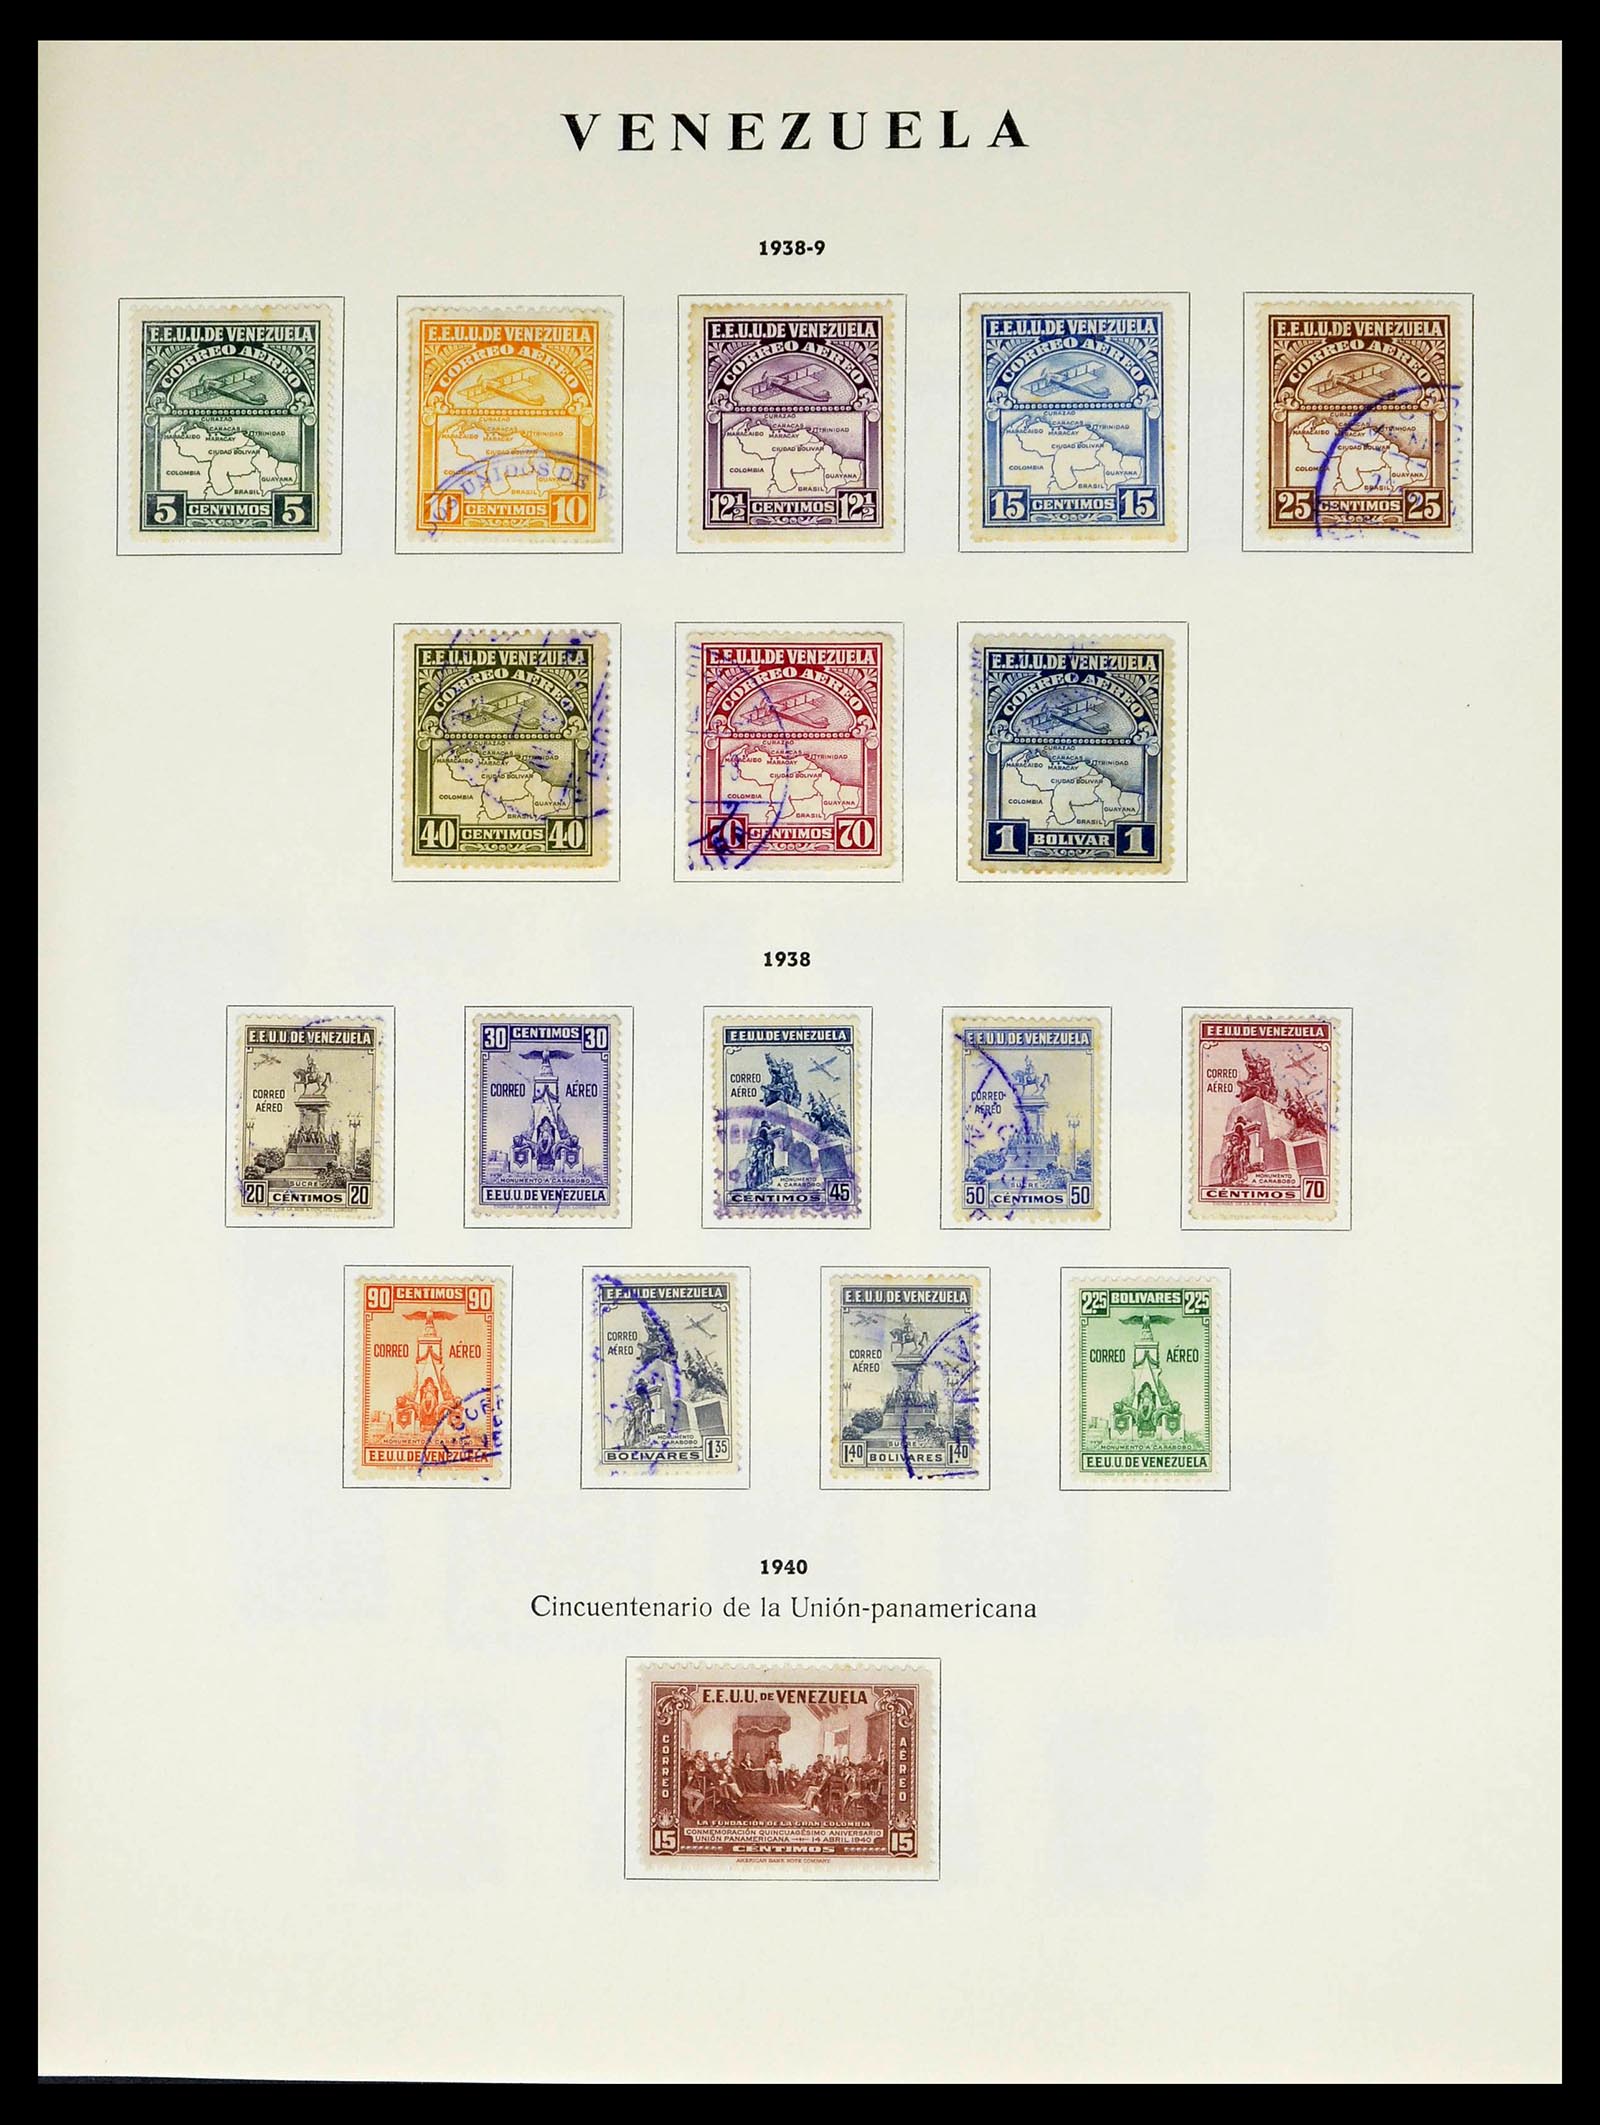 39223 0097 - Stamp collection 39223 Venezuela 1859-1984.